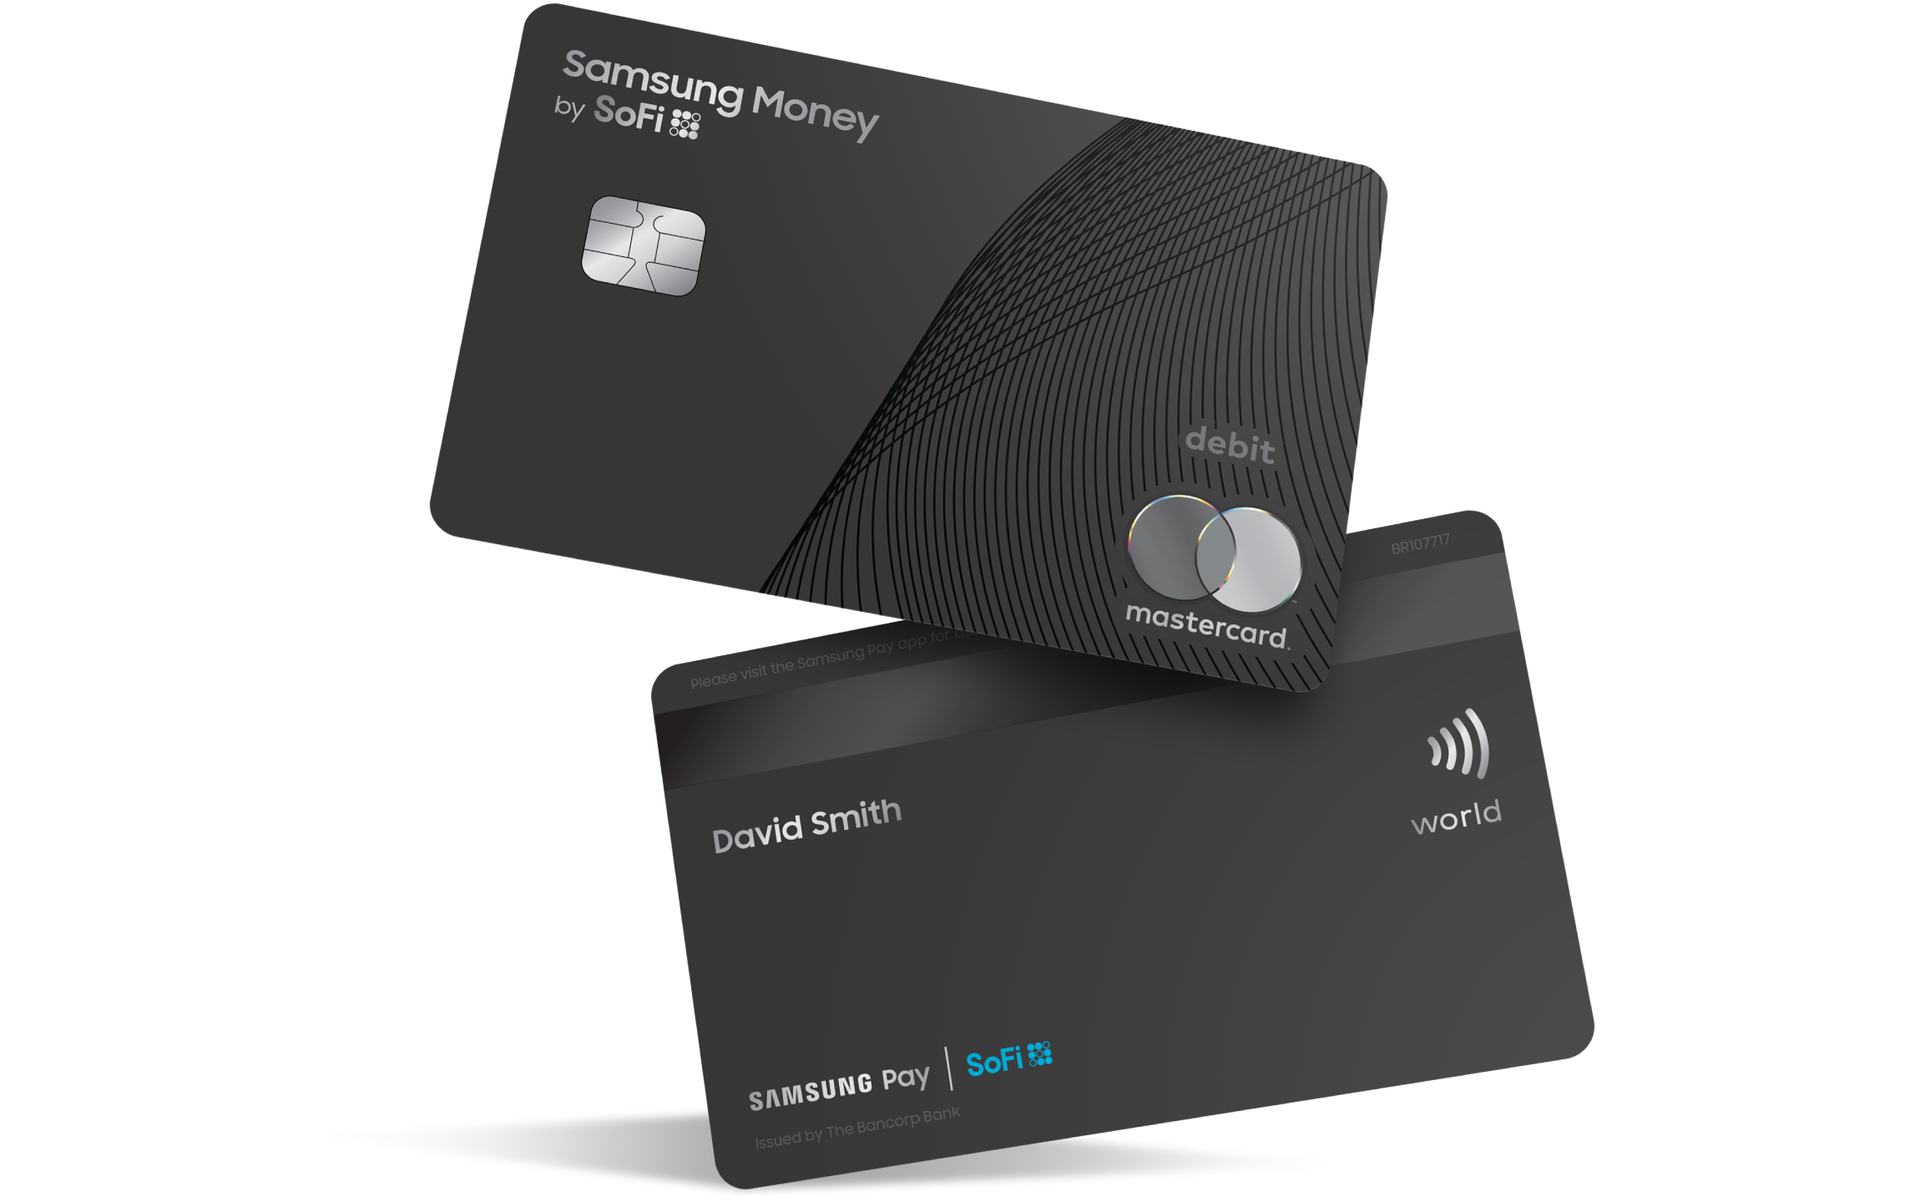 Samsung money by SoFi debit card